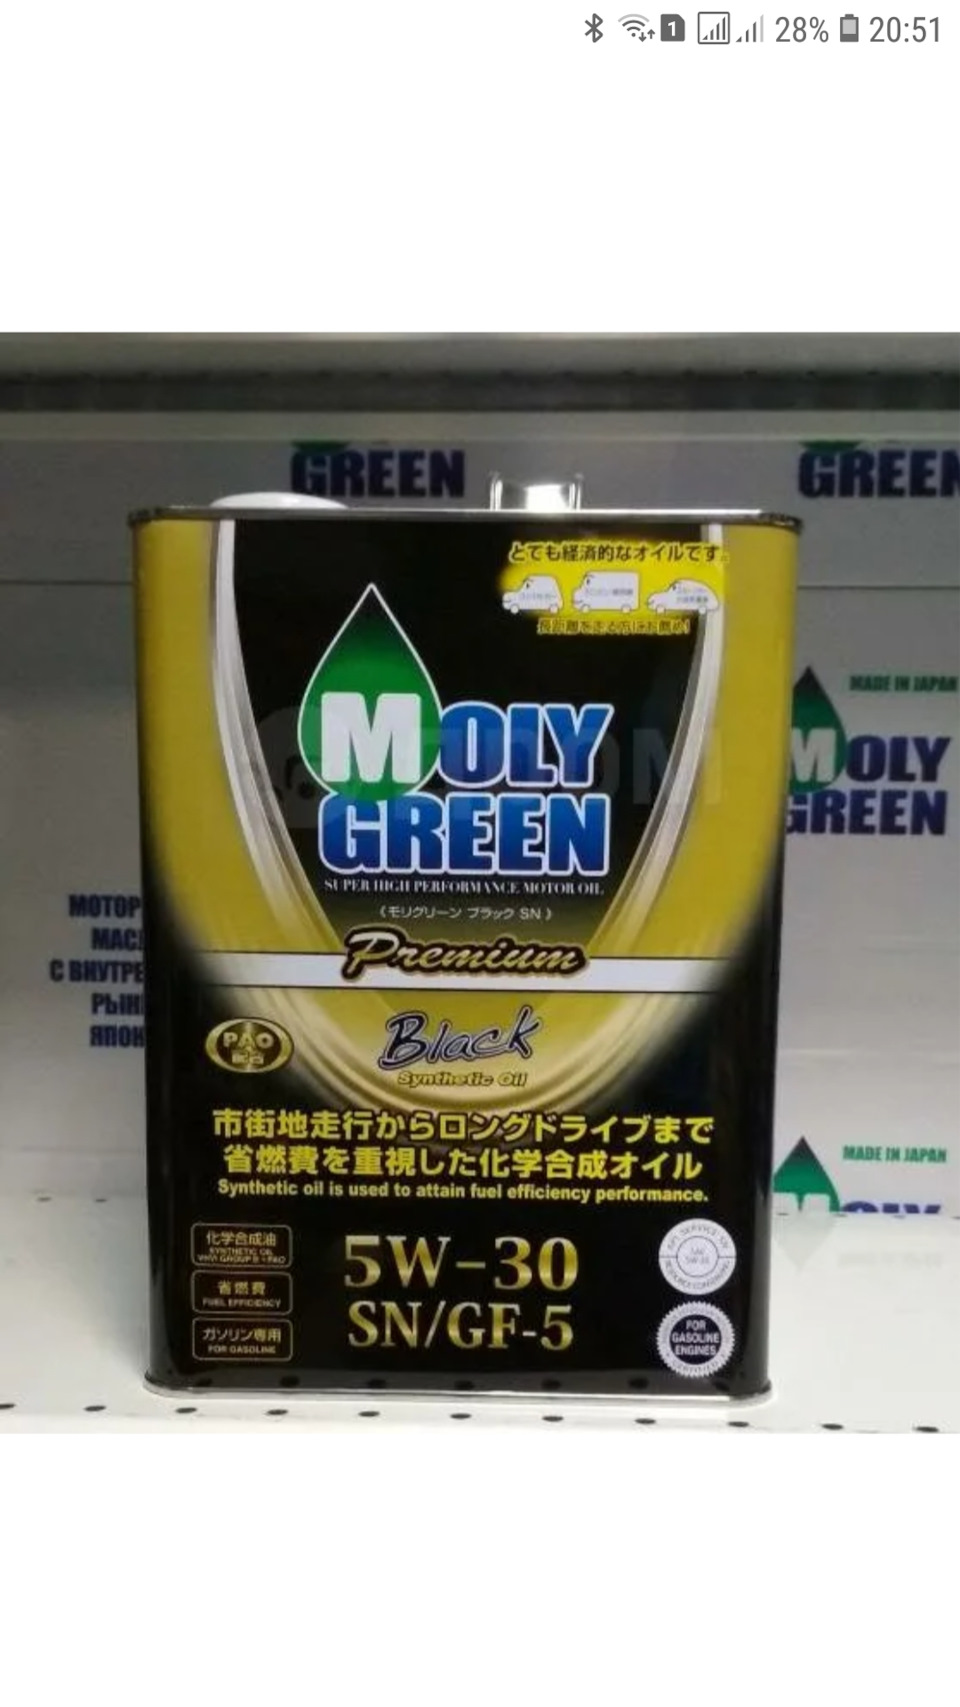 Моли грин 5w30 купить. Moly Green 5w30 Premium. Moly Green Black SN/gf-5 5w-30 4л. Moly Green 5w30 Premium Black. Moly Green 5w30 selection.